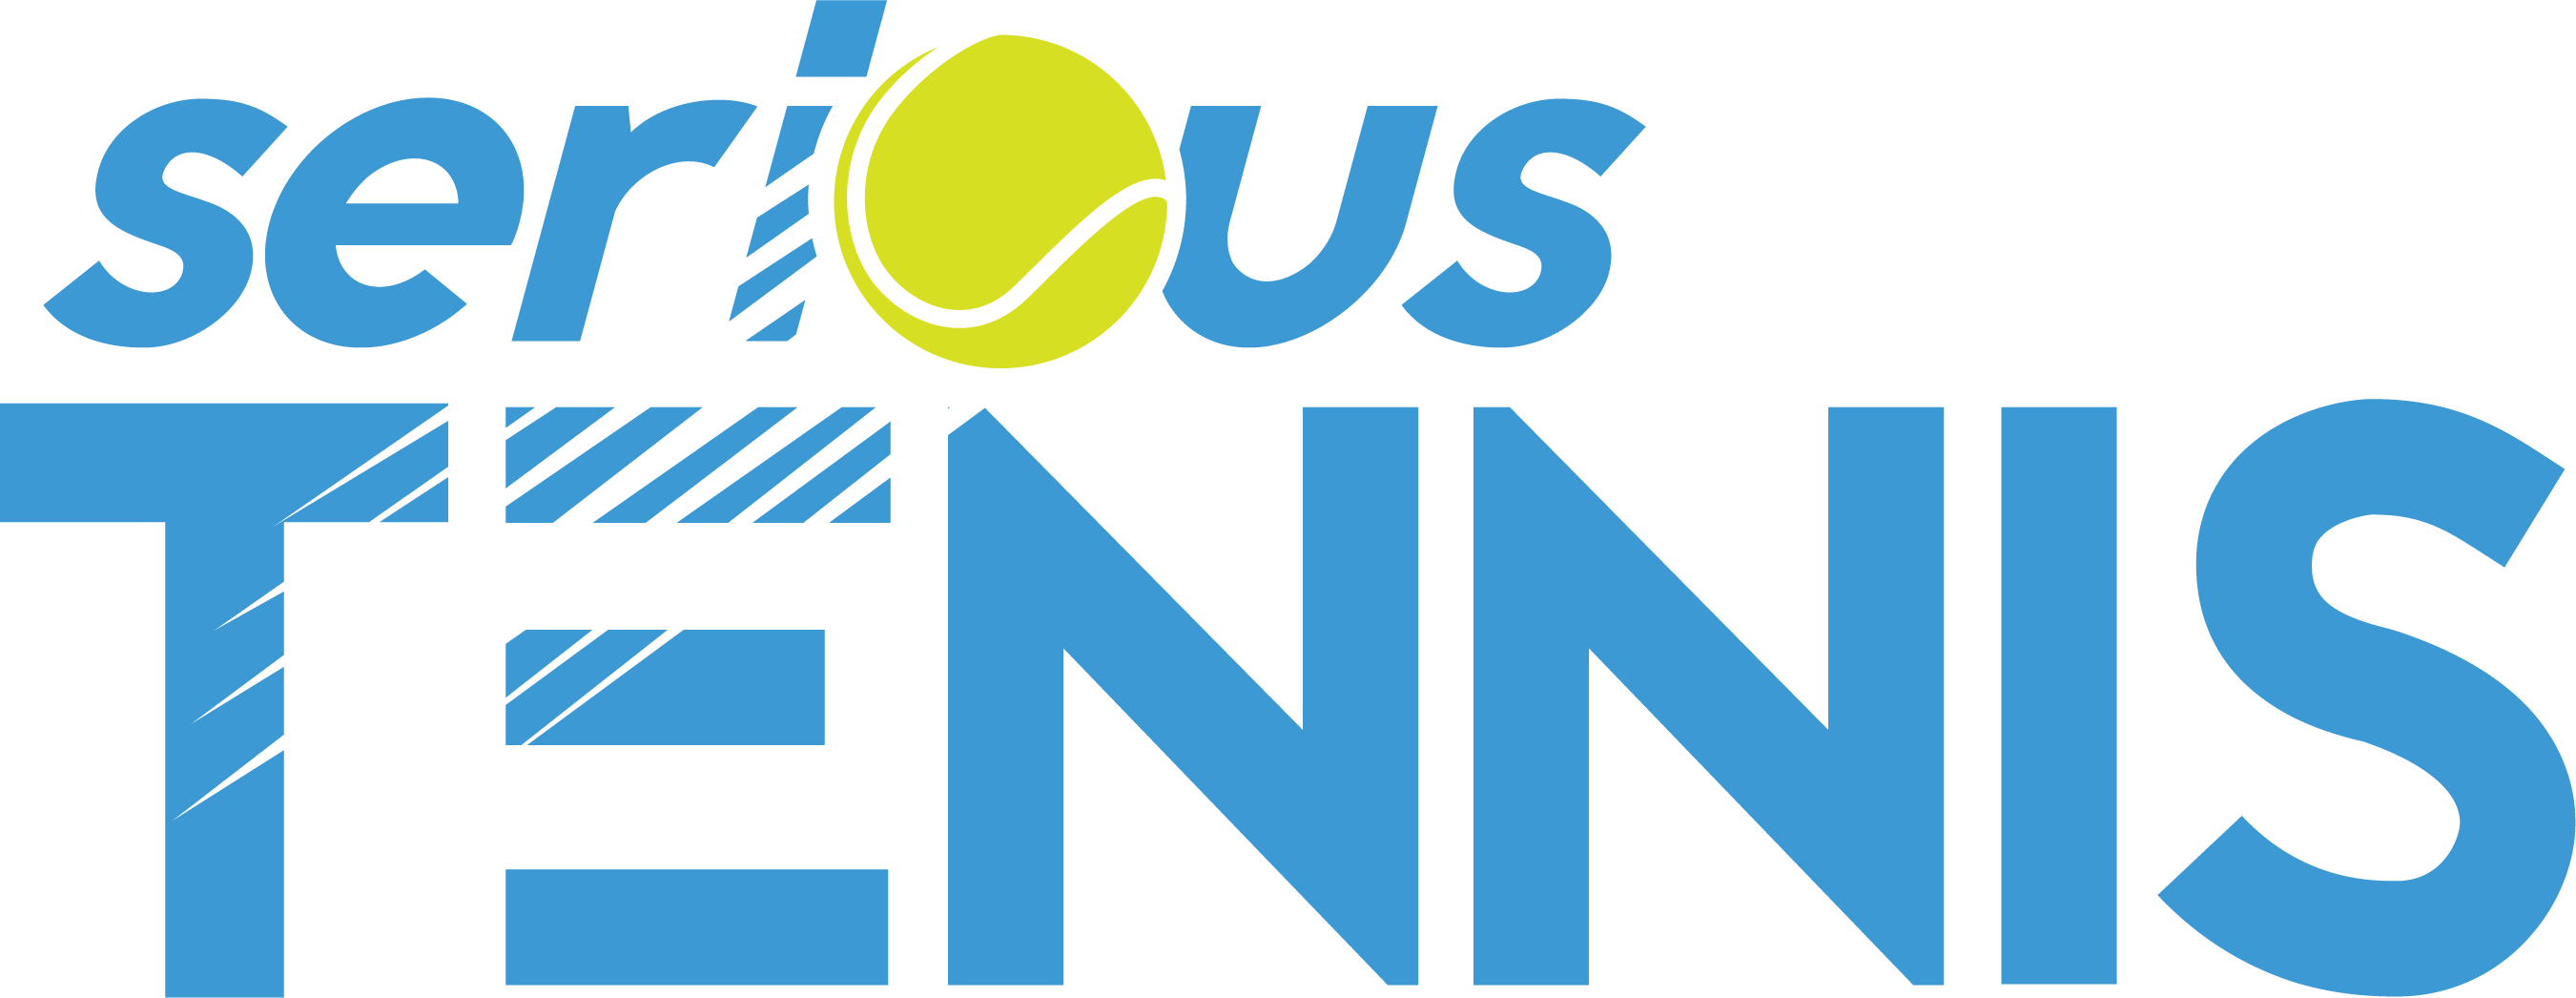 Serious Tennis